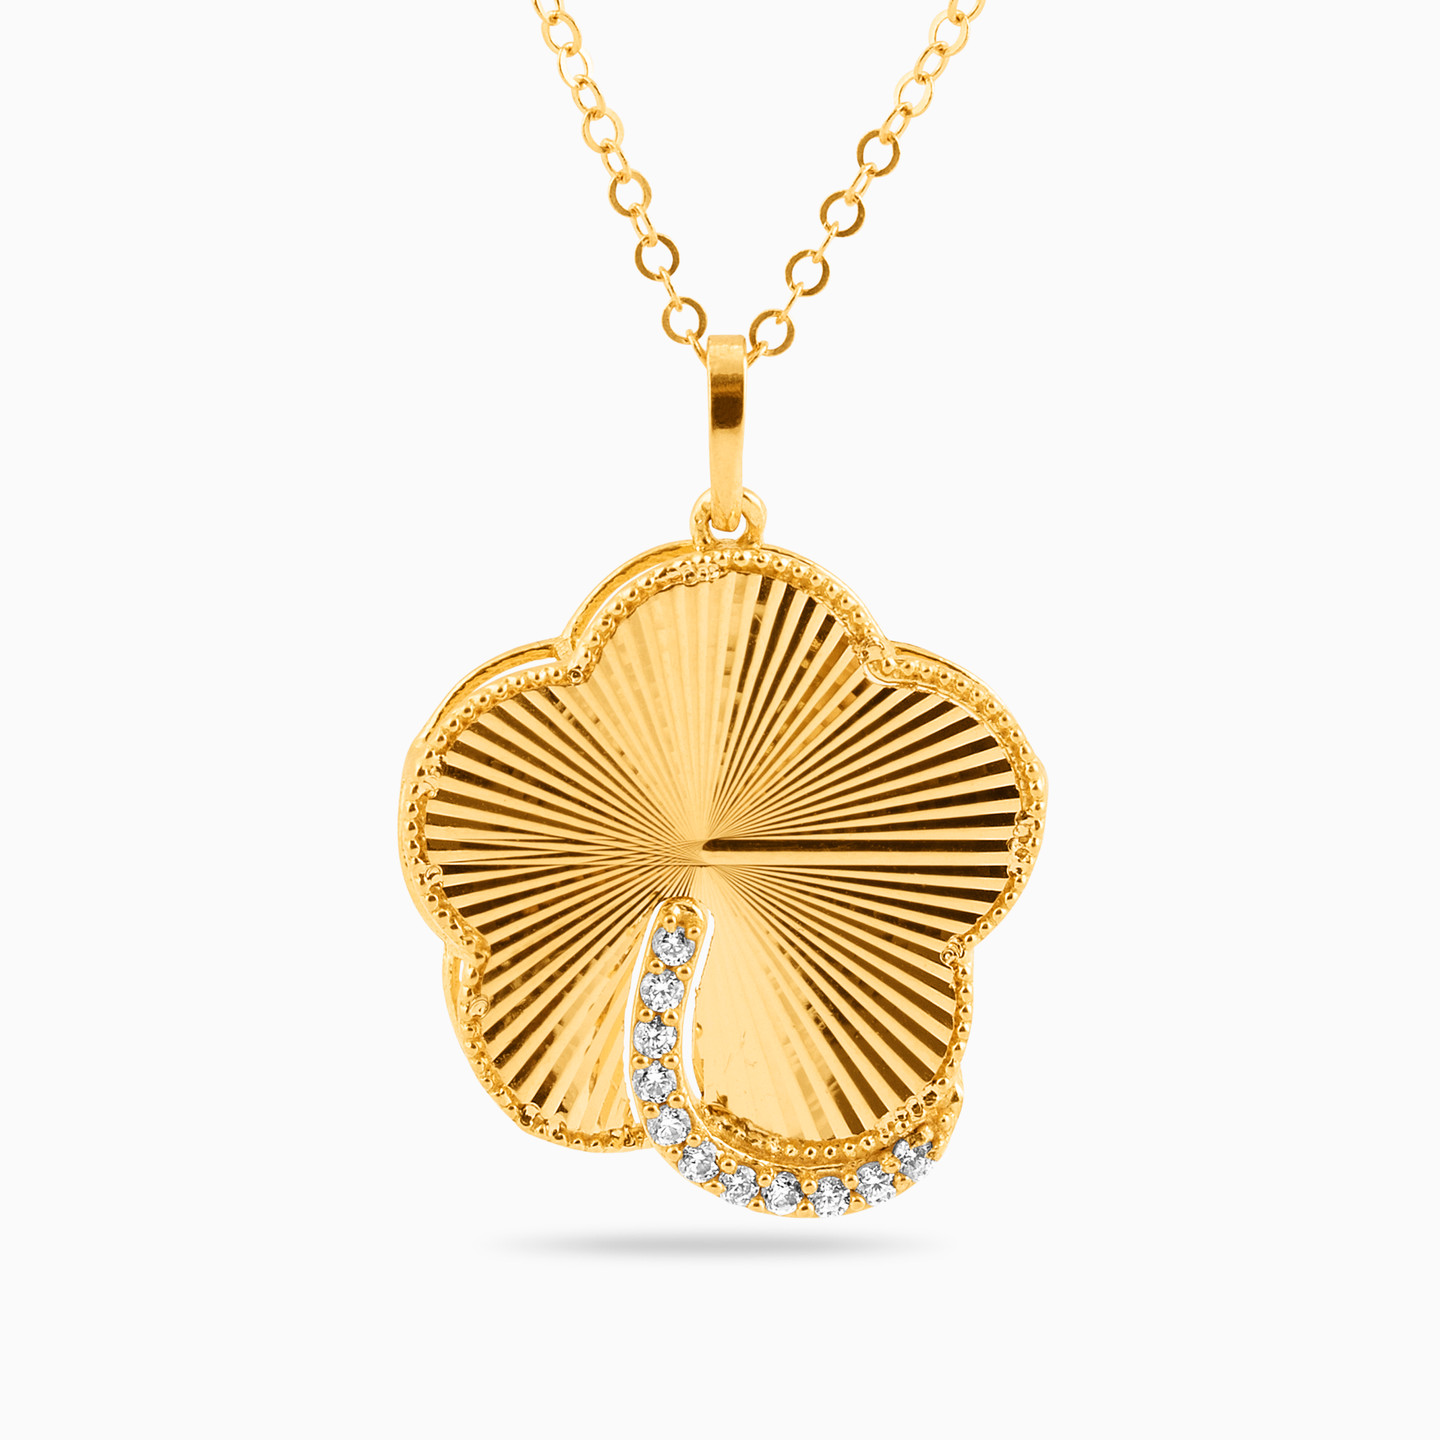 21K Gold Cubic Zirconia Pendant Necklace